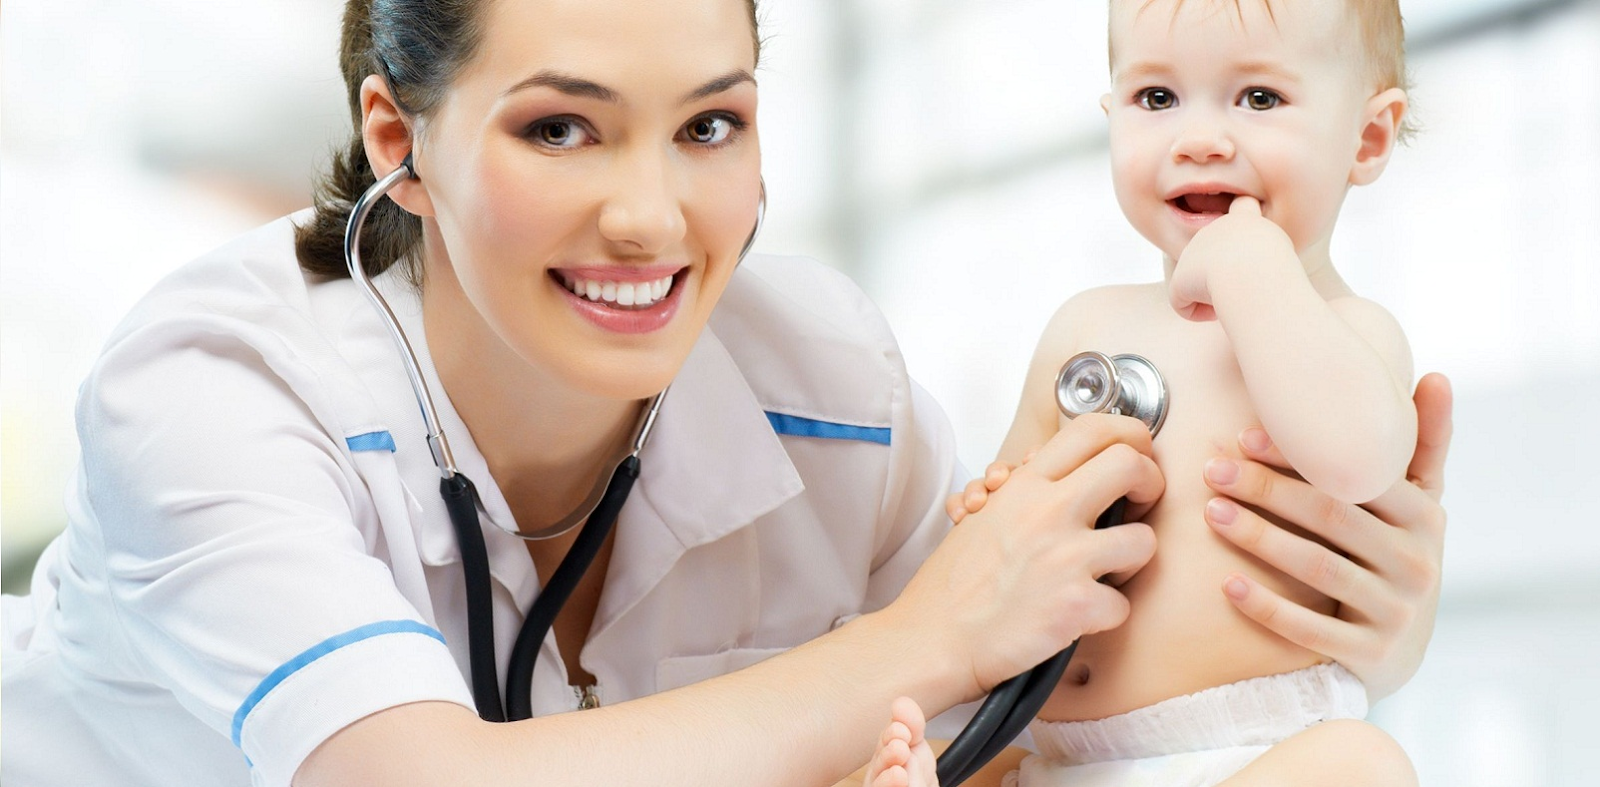 Pediatric Certification Courses